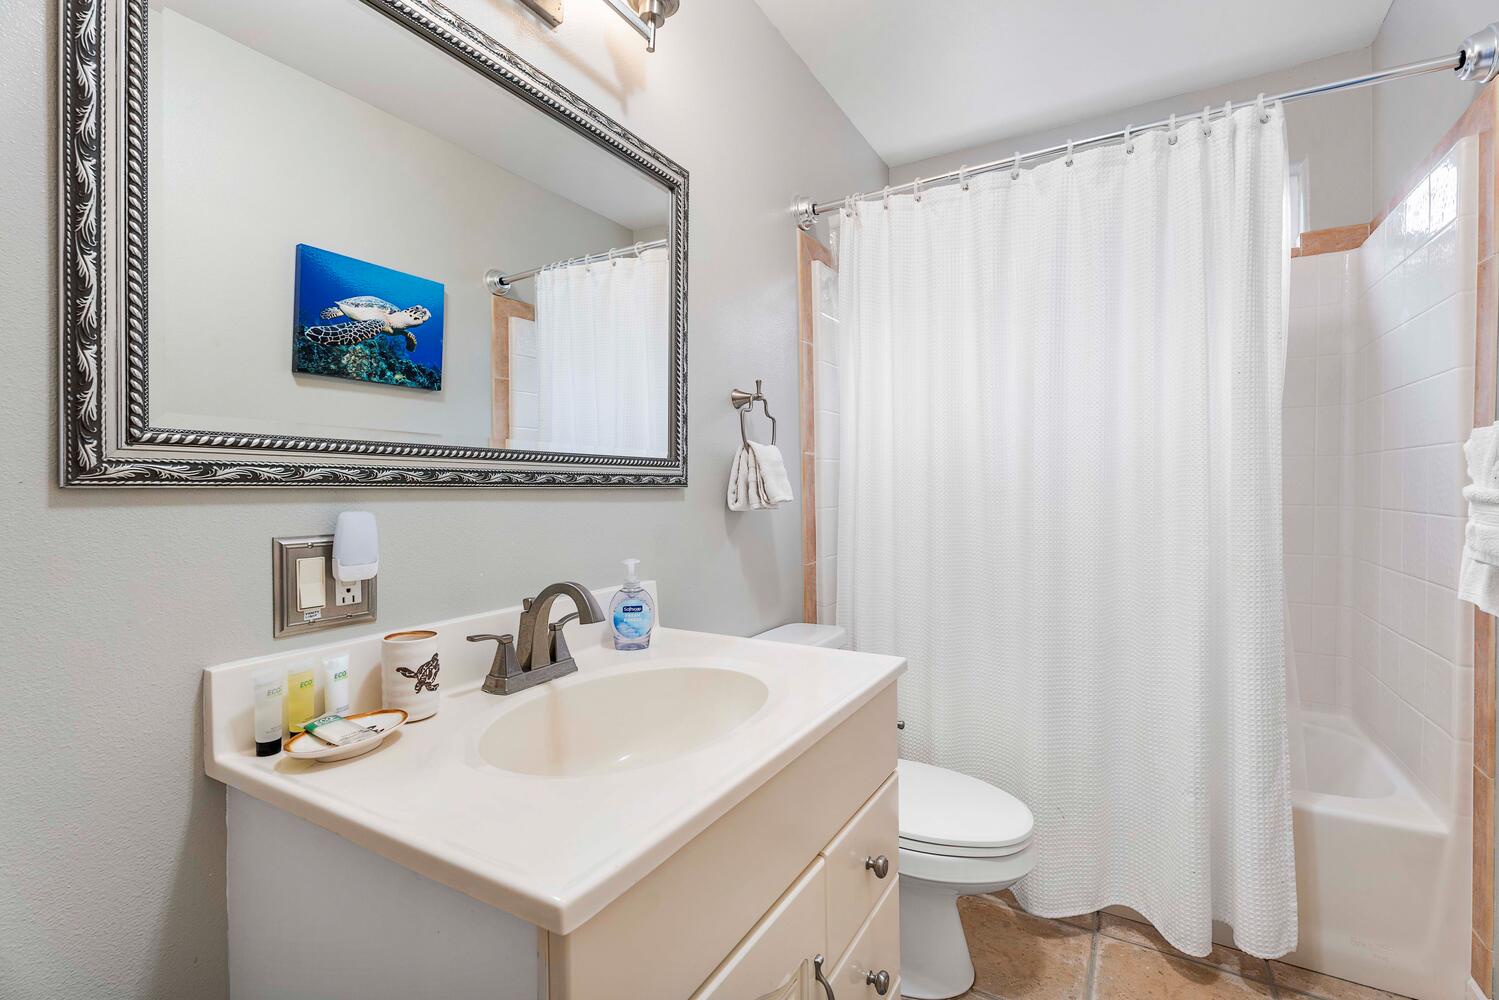 Kailua Kona Vacation Rentals, Honu O Kai (Turtle of the Sea) - The shared full bathroom on the ground level with a single vanity.